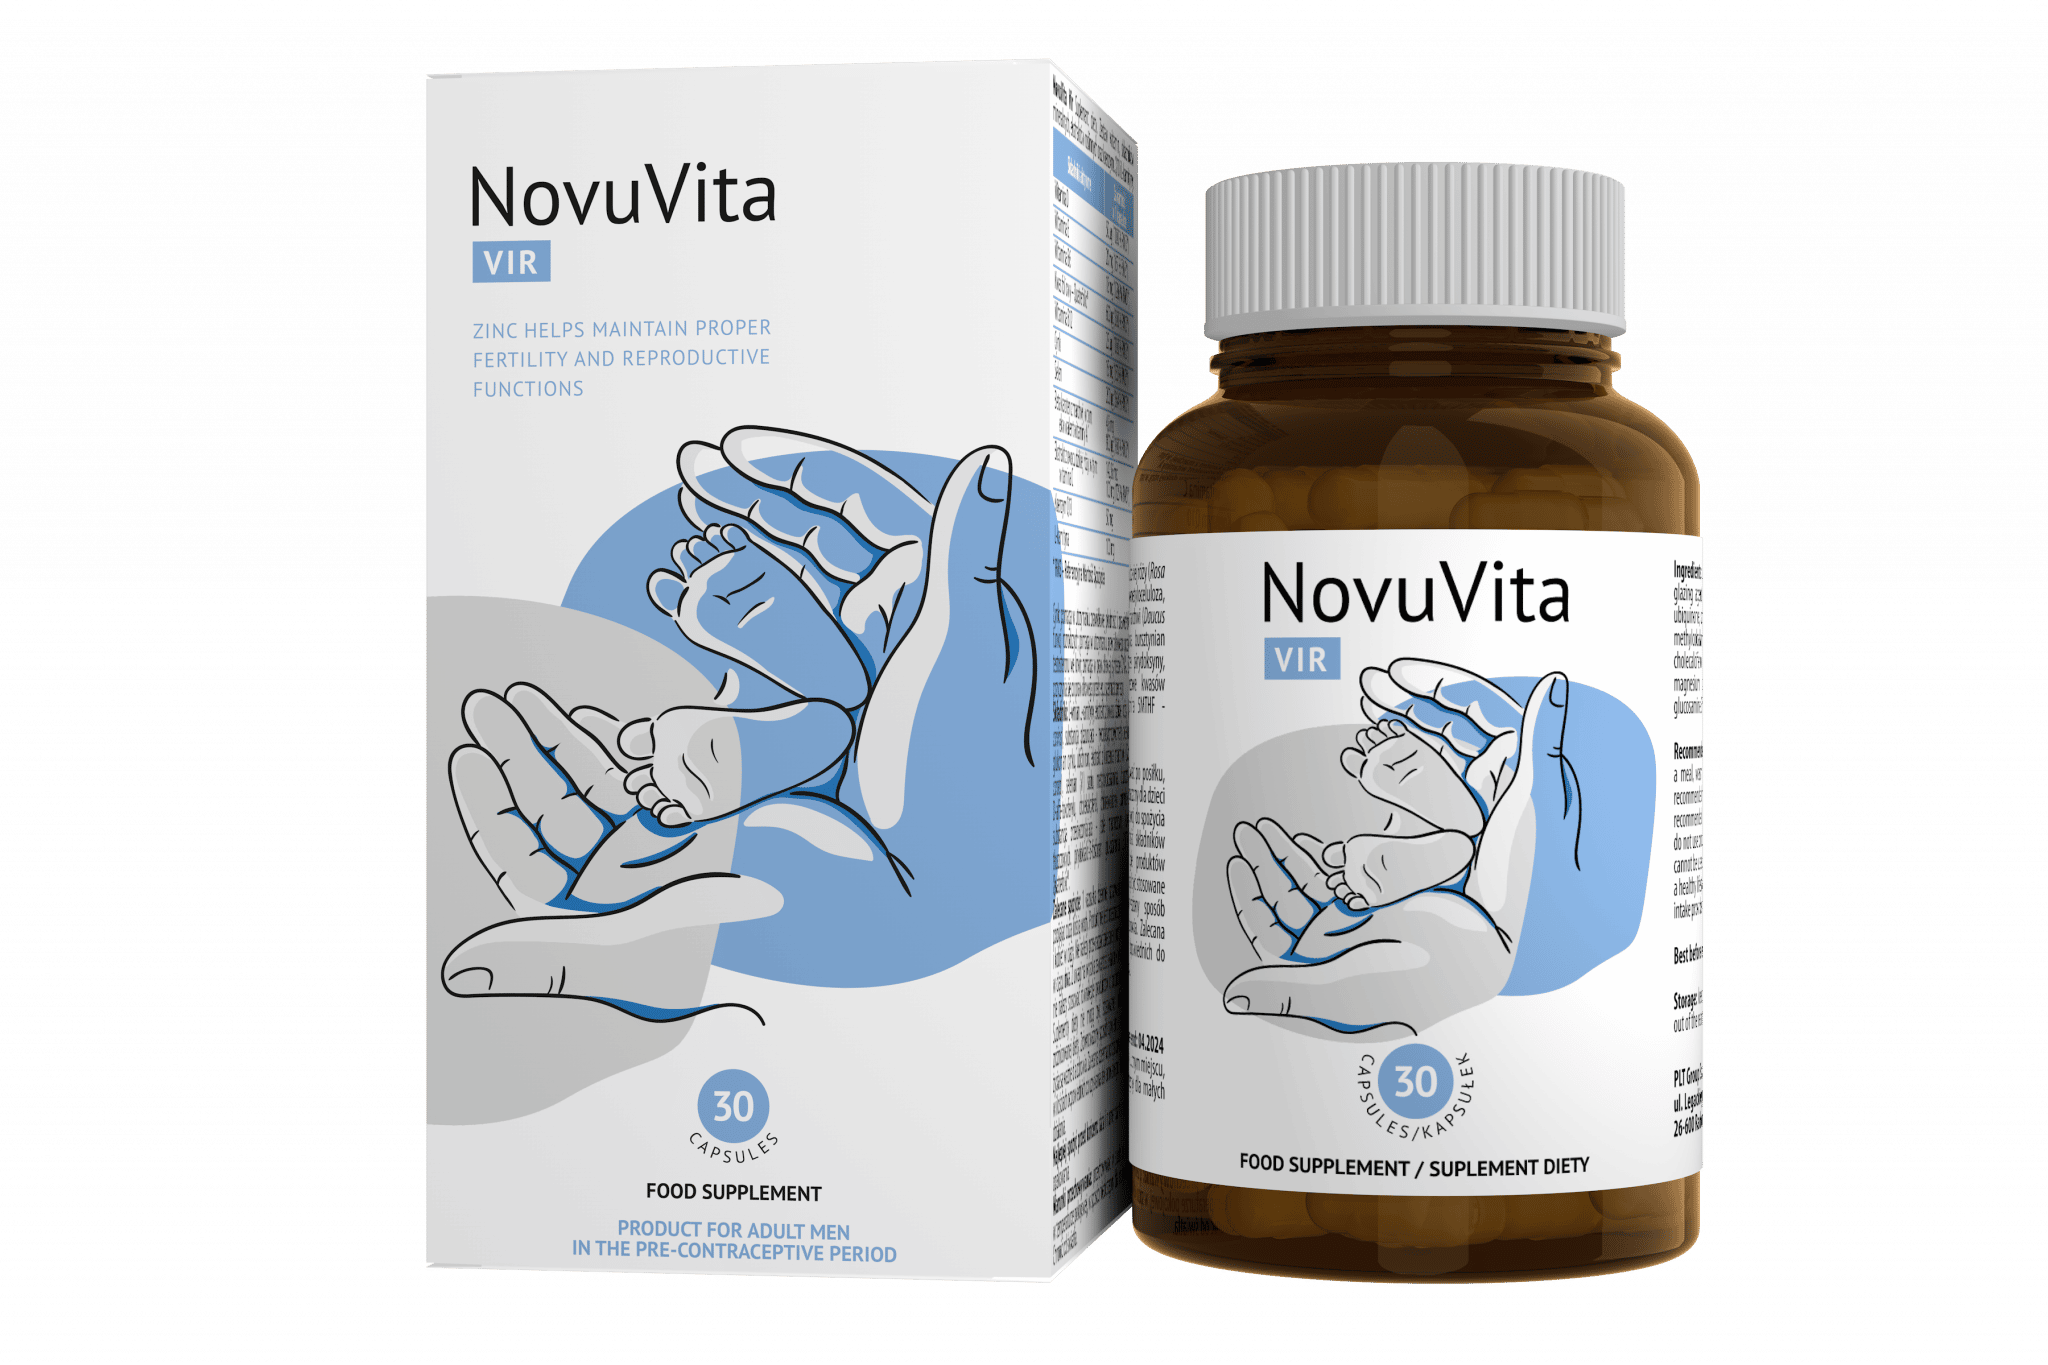 NovuVita Vir Customer Reviews